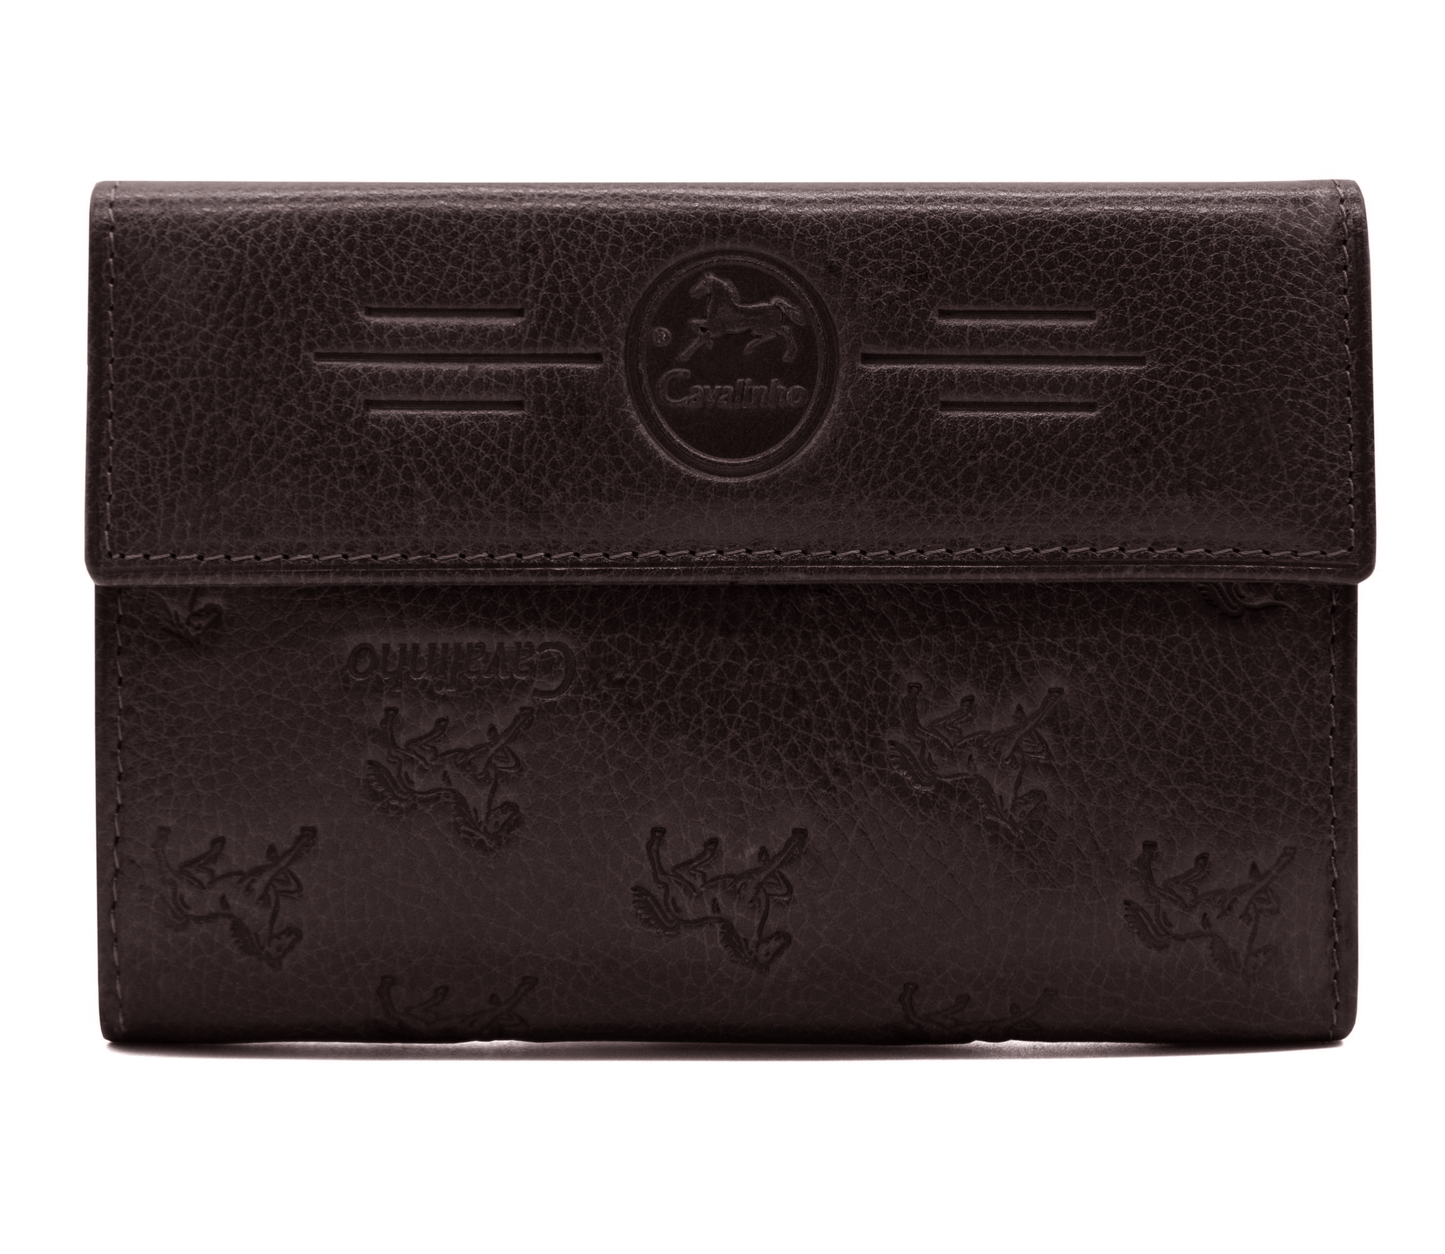 Cavalinho Signature Wallet - Brown - 28090202_b